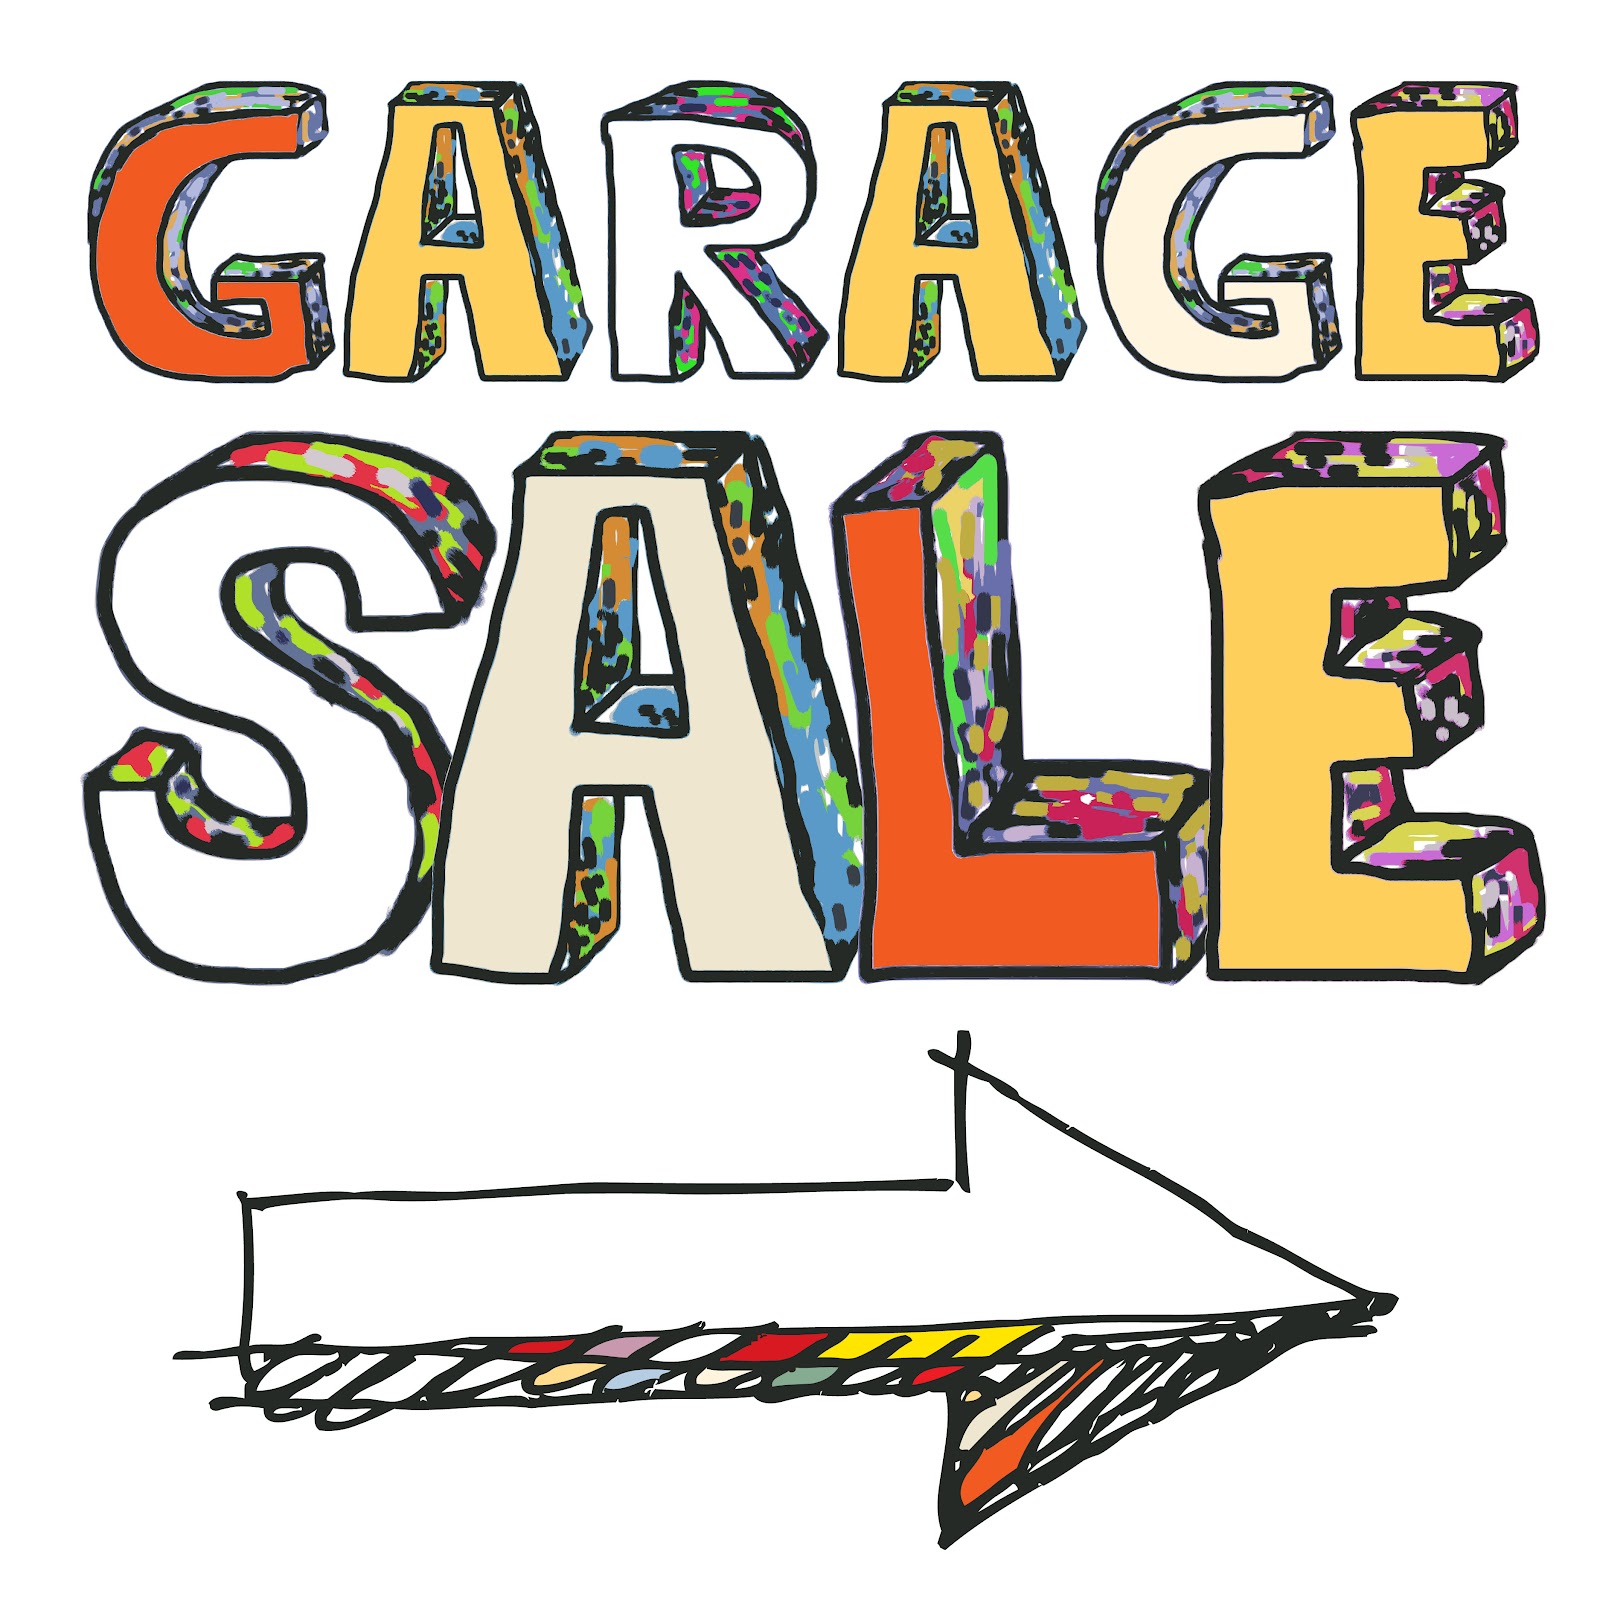 Download Garage Sale Yard Sale Flyers Hd Image Clipart PNG Free FreePngClip...